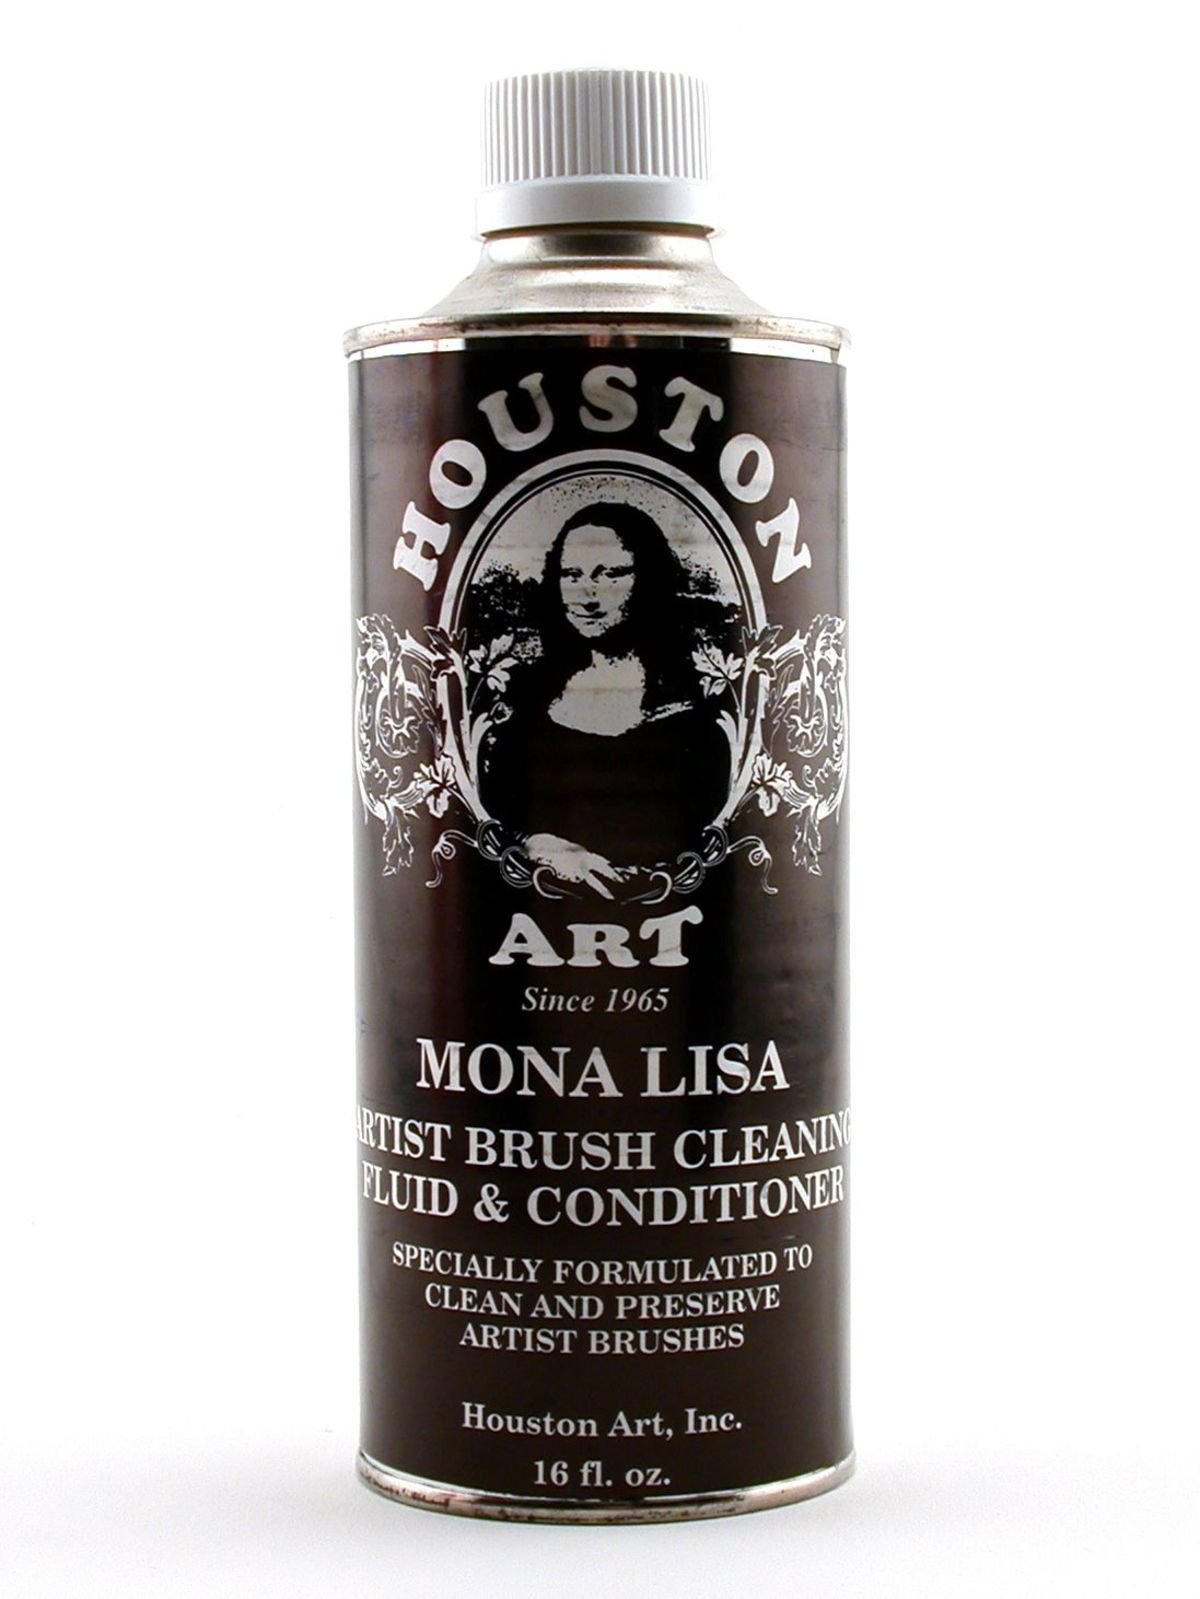 Mona Lisa - Brush Cleaning Fluid